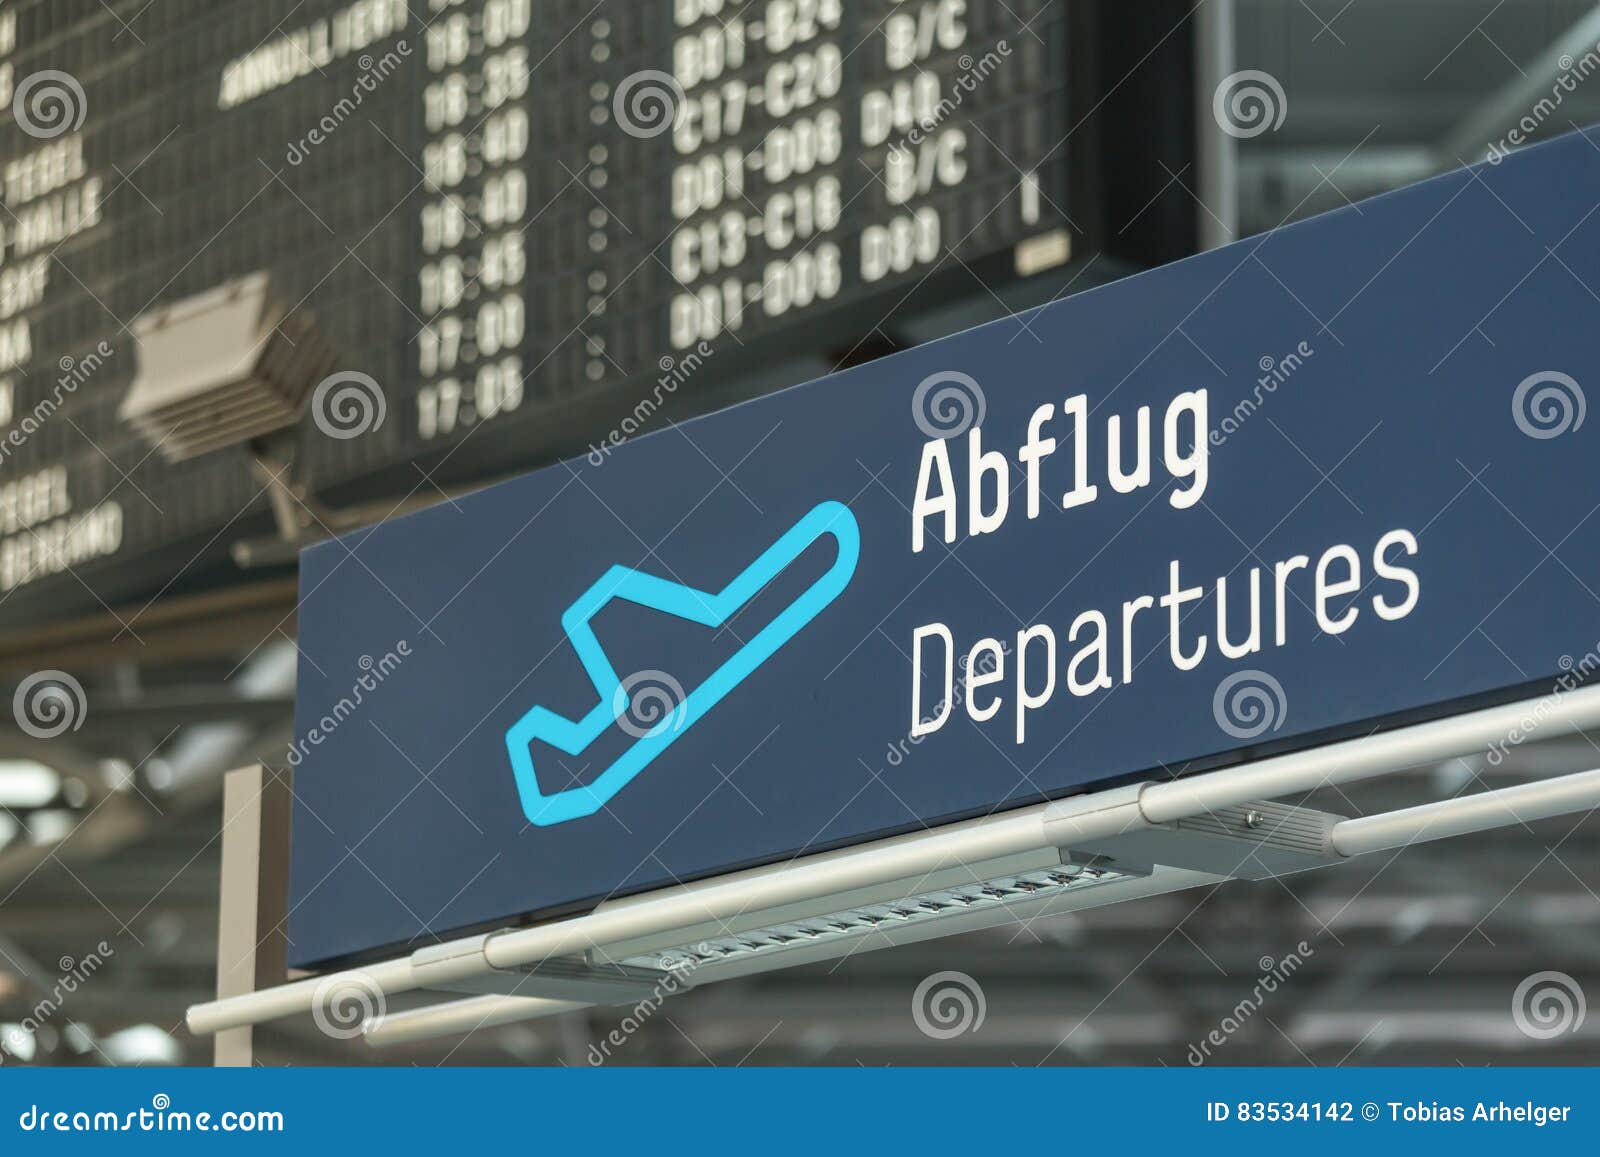 airport departure board